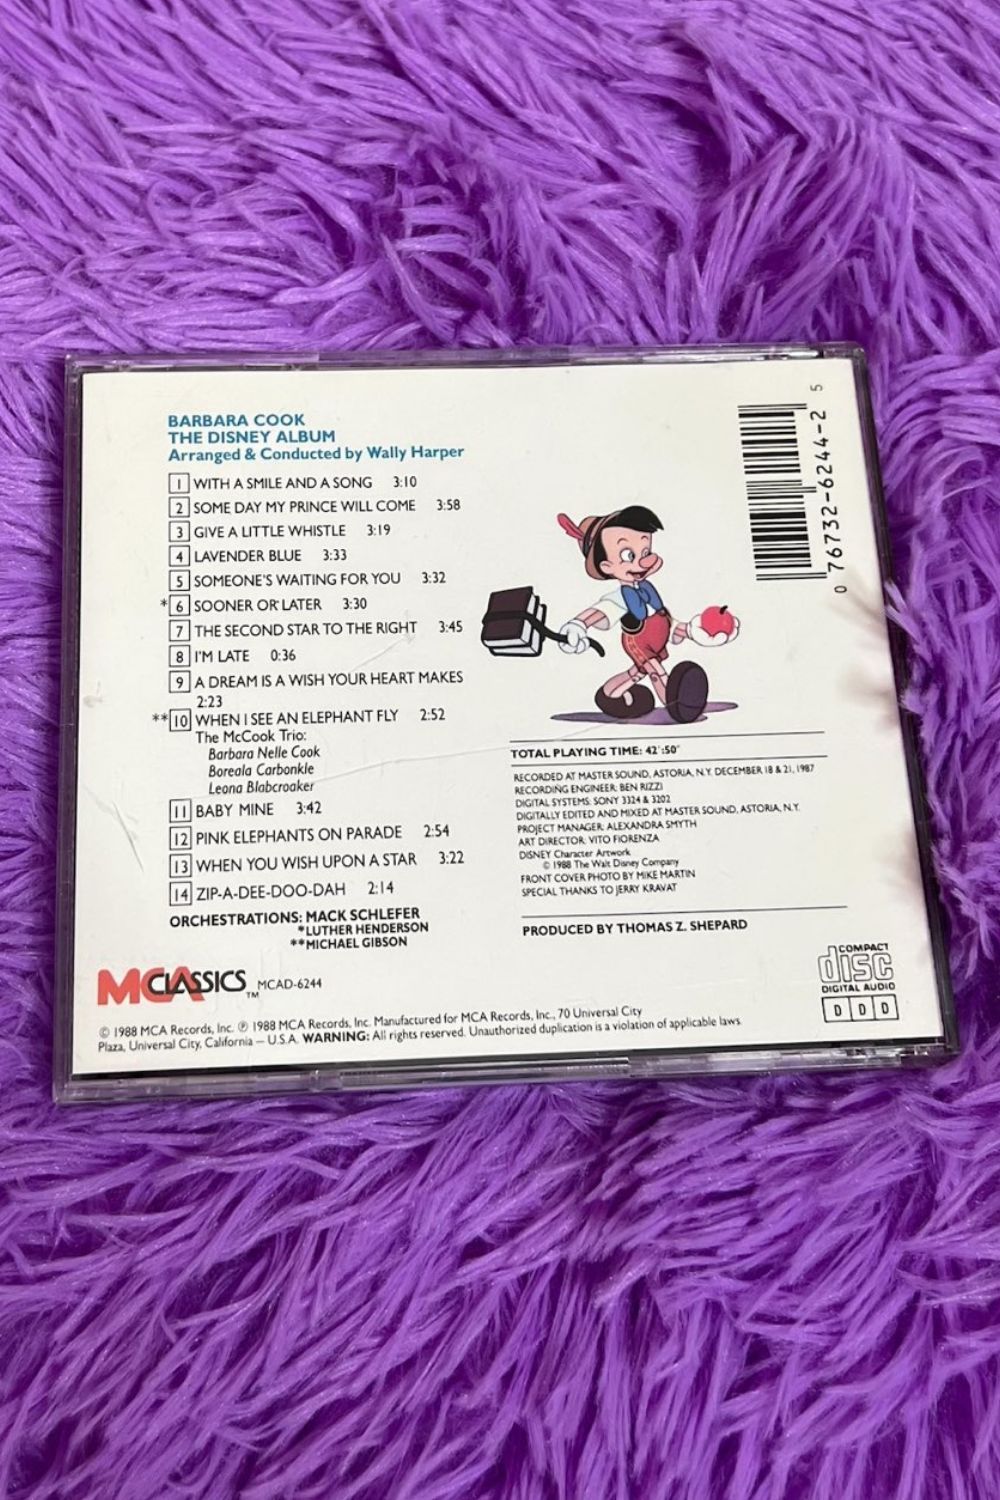 BARBARA COOK - THE DISNEY ALBUM CD*